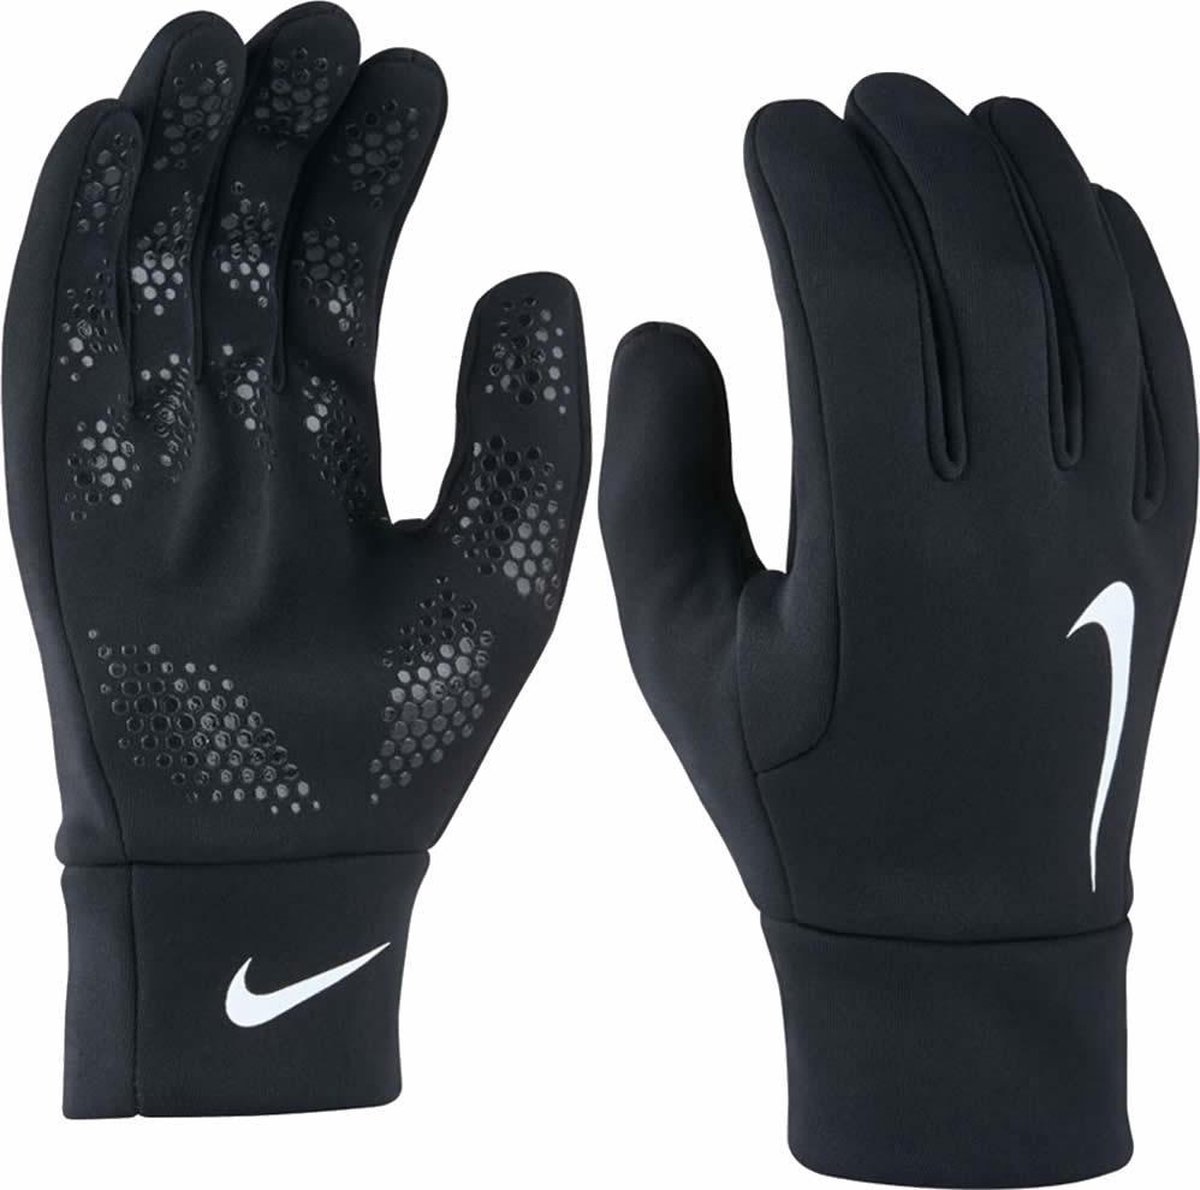 Nike Academy Hyperwarm handschoenen zwart/wit | bol.com